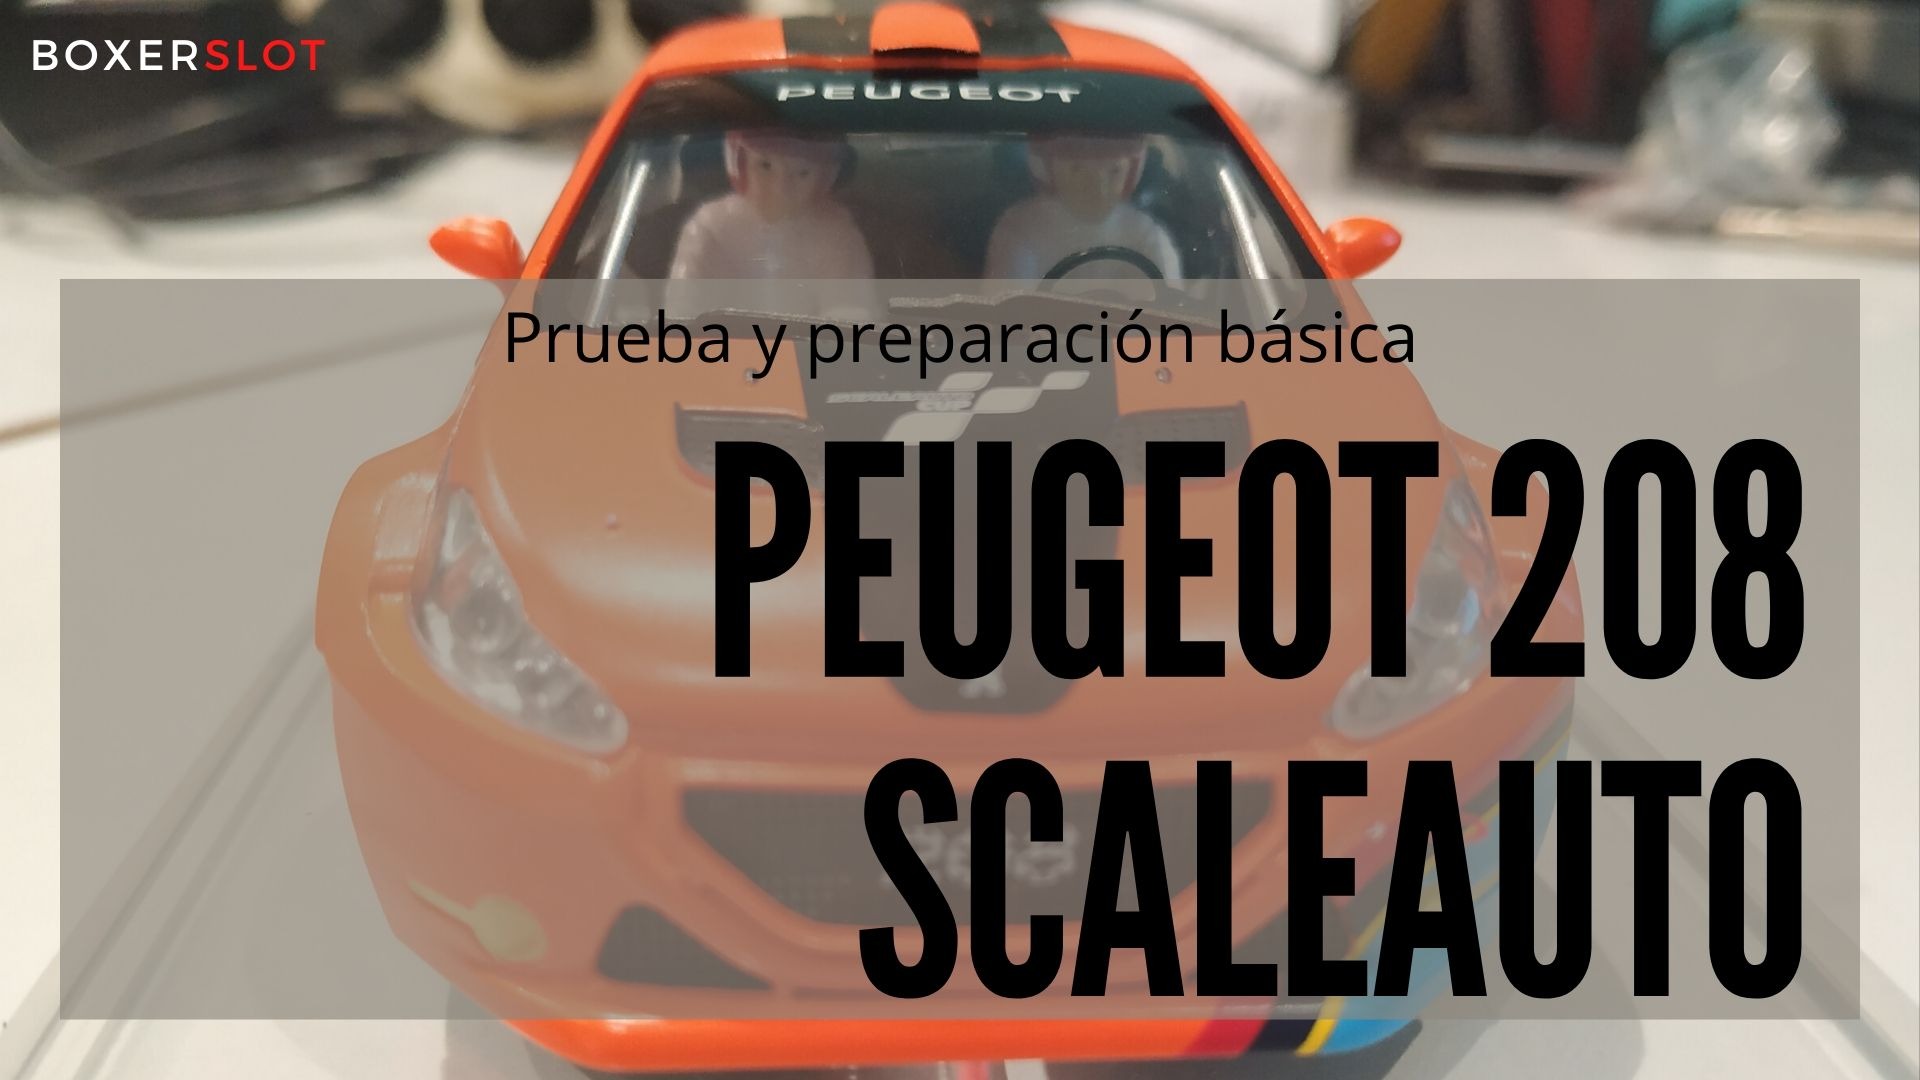 Peugeot 208 Scaleauto. Prueba y mejora básica.